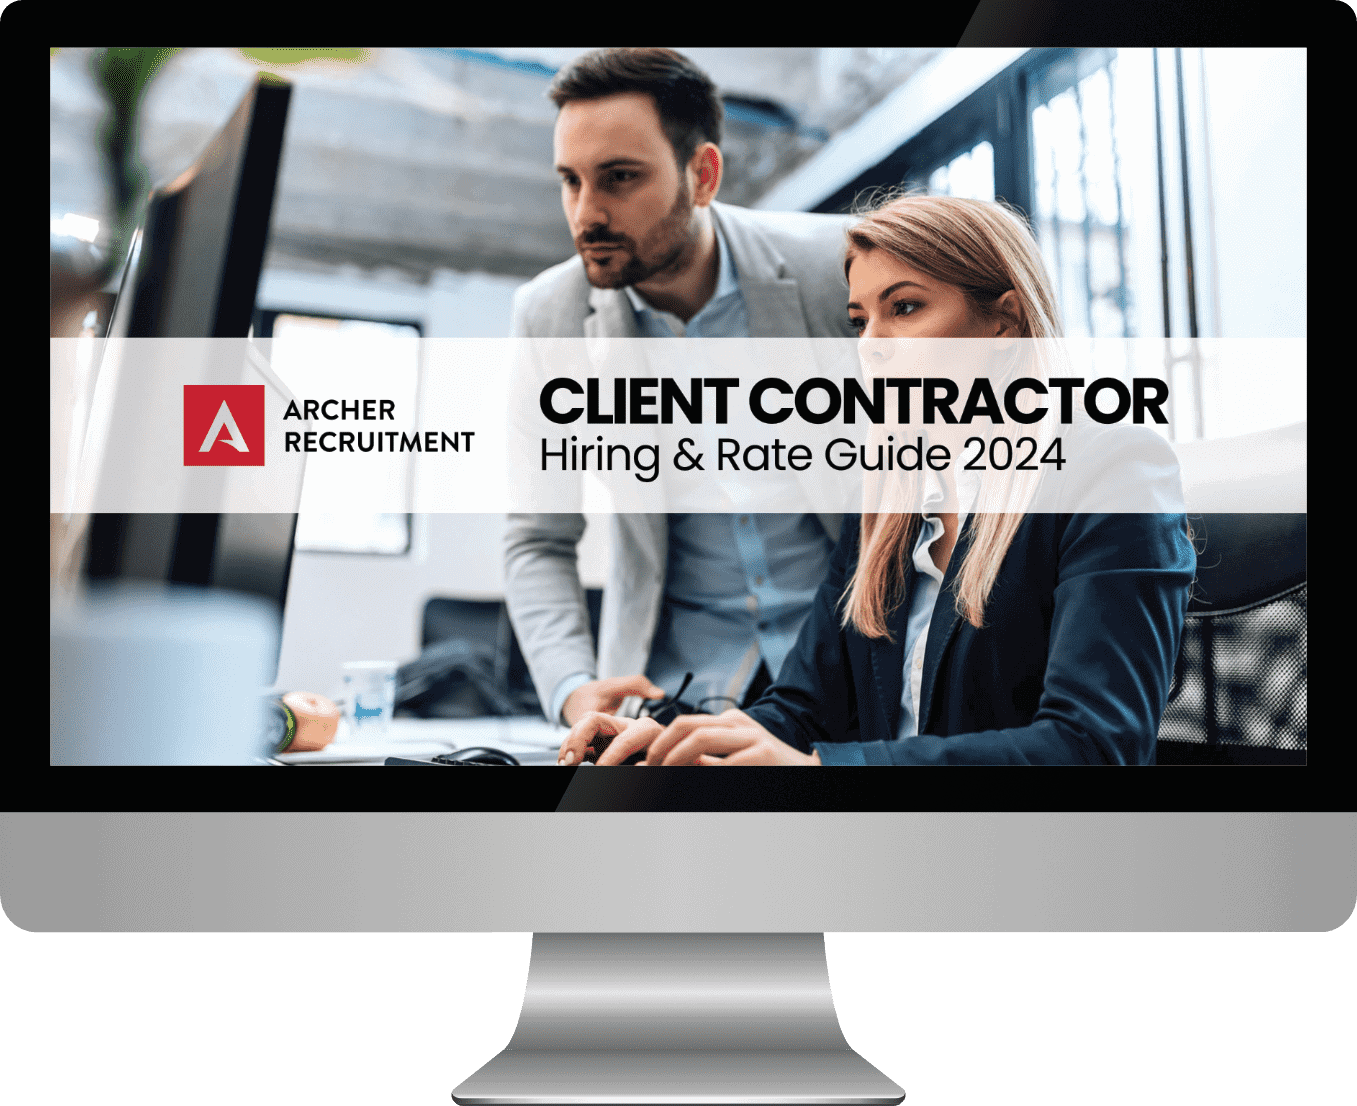 Archer Recruitment - Client Contractor Hiring Guide 2024